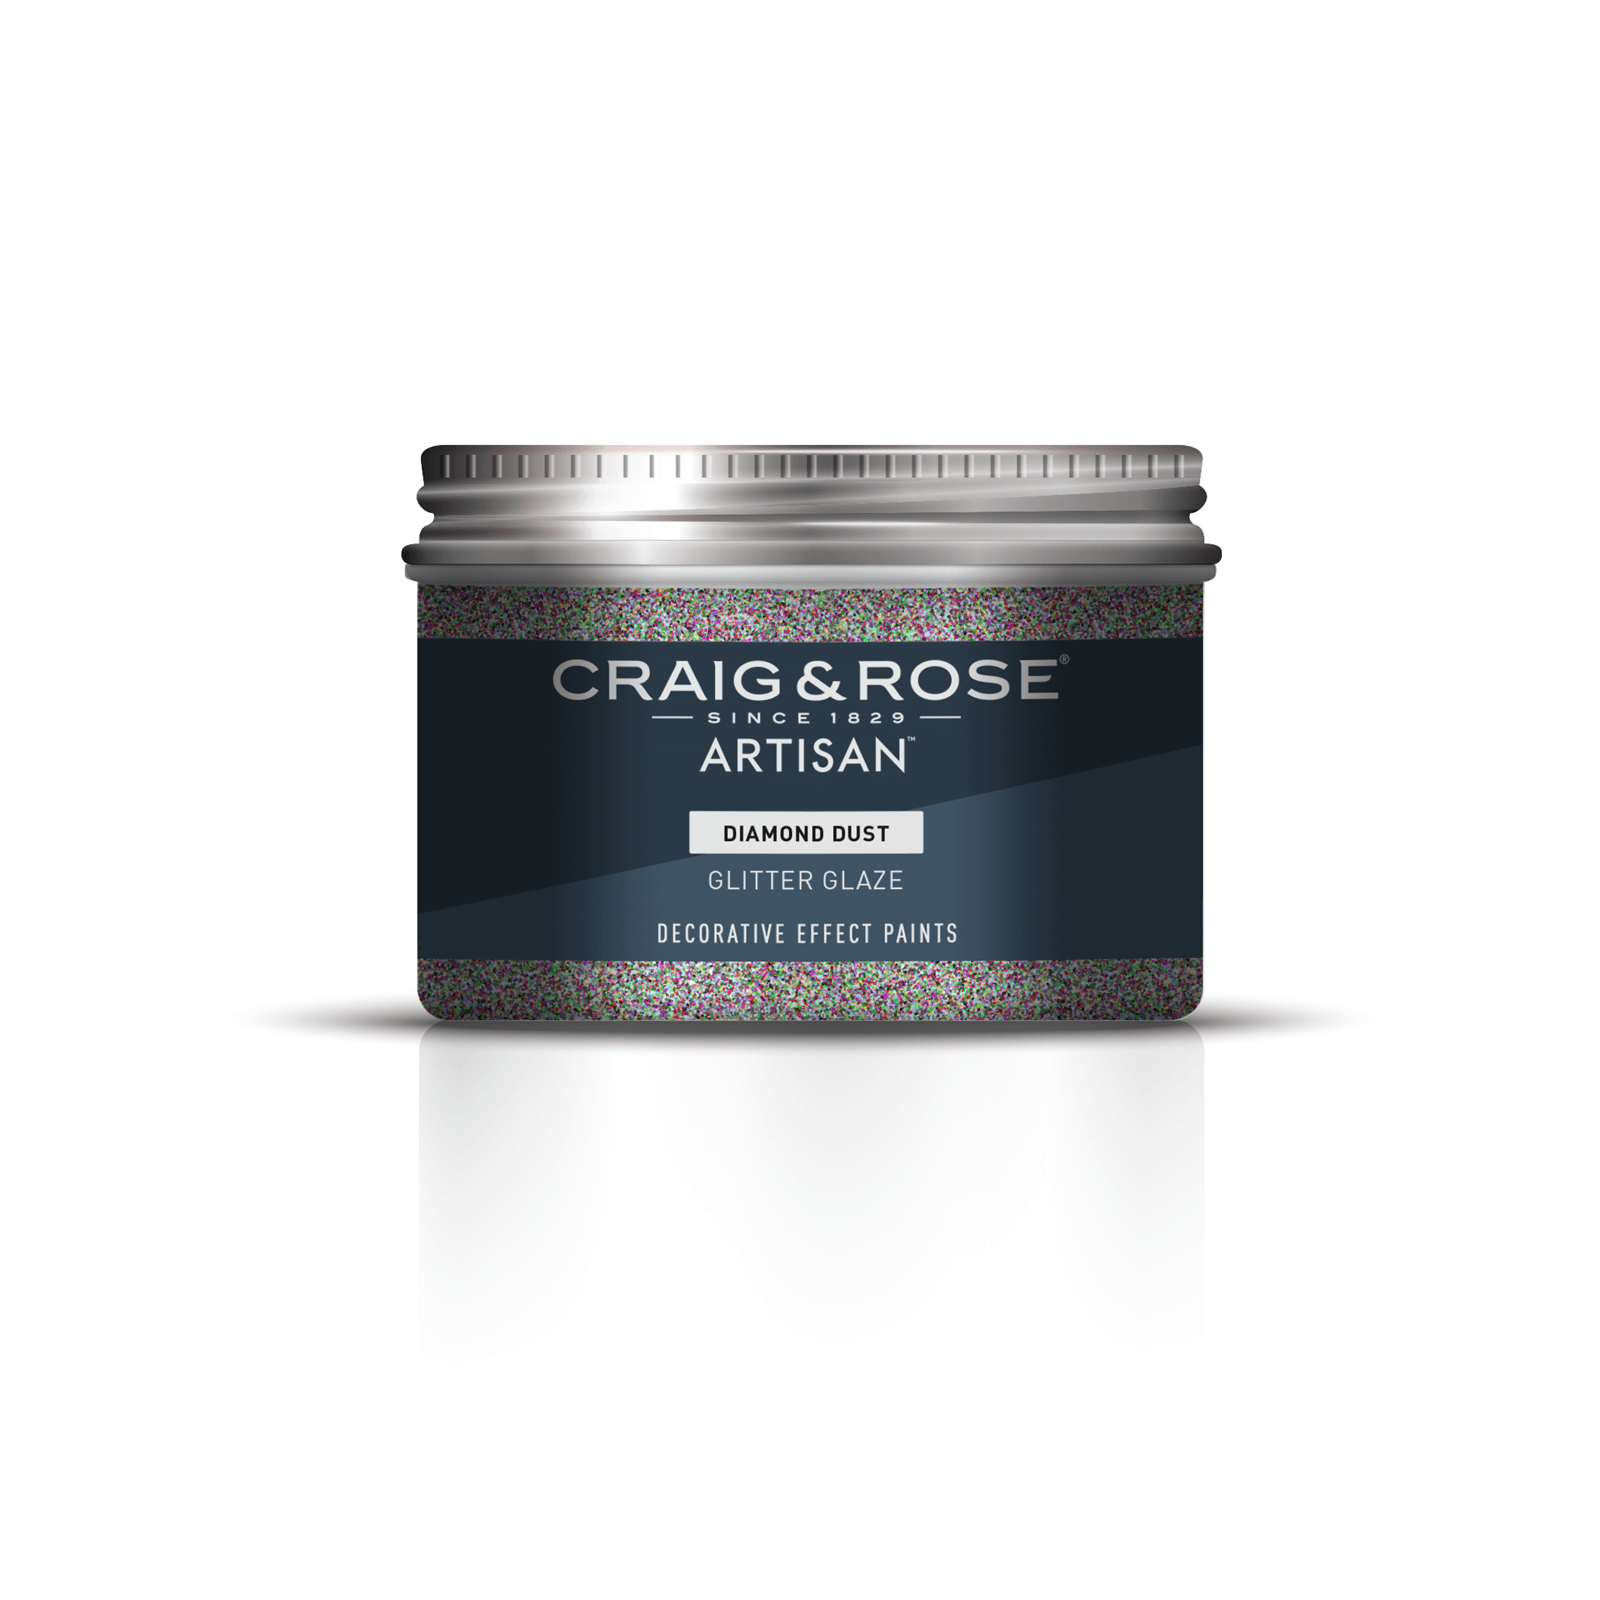 Craig & Rose Artisan Glitter Glaze Paint Diamond Dust - 300ml